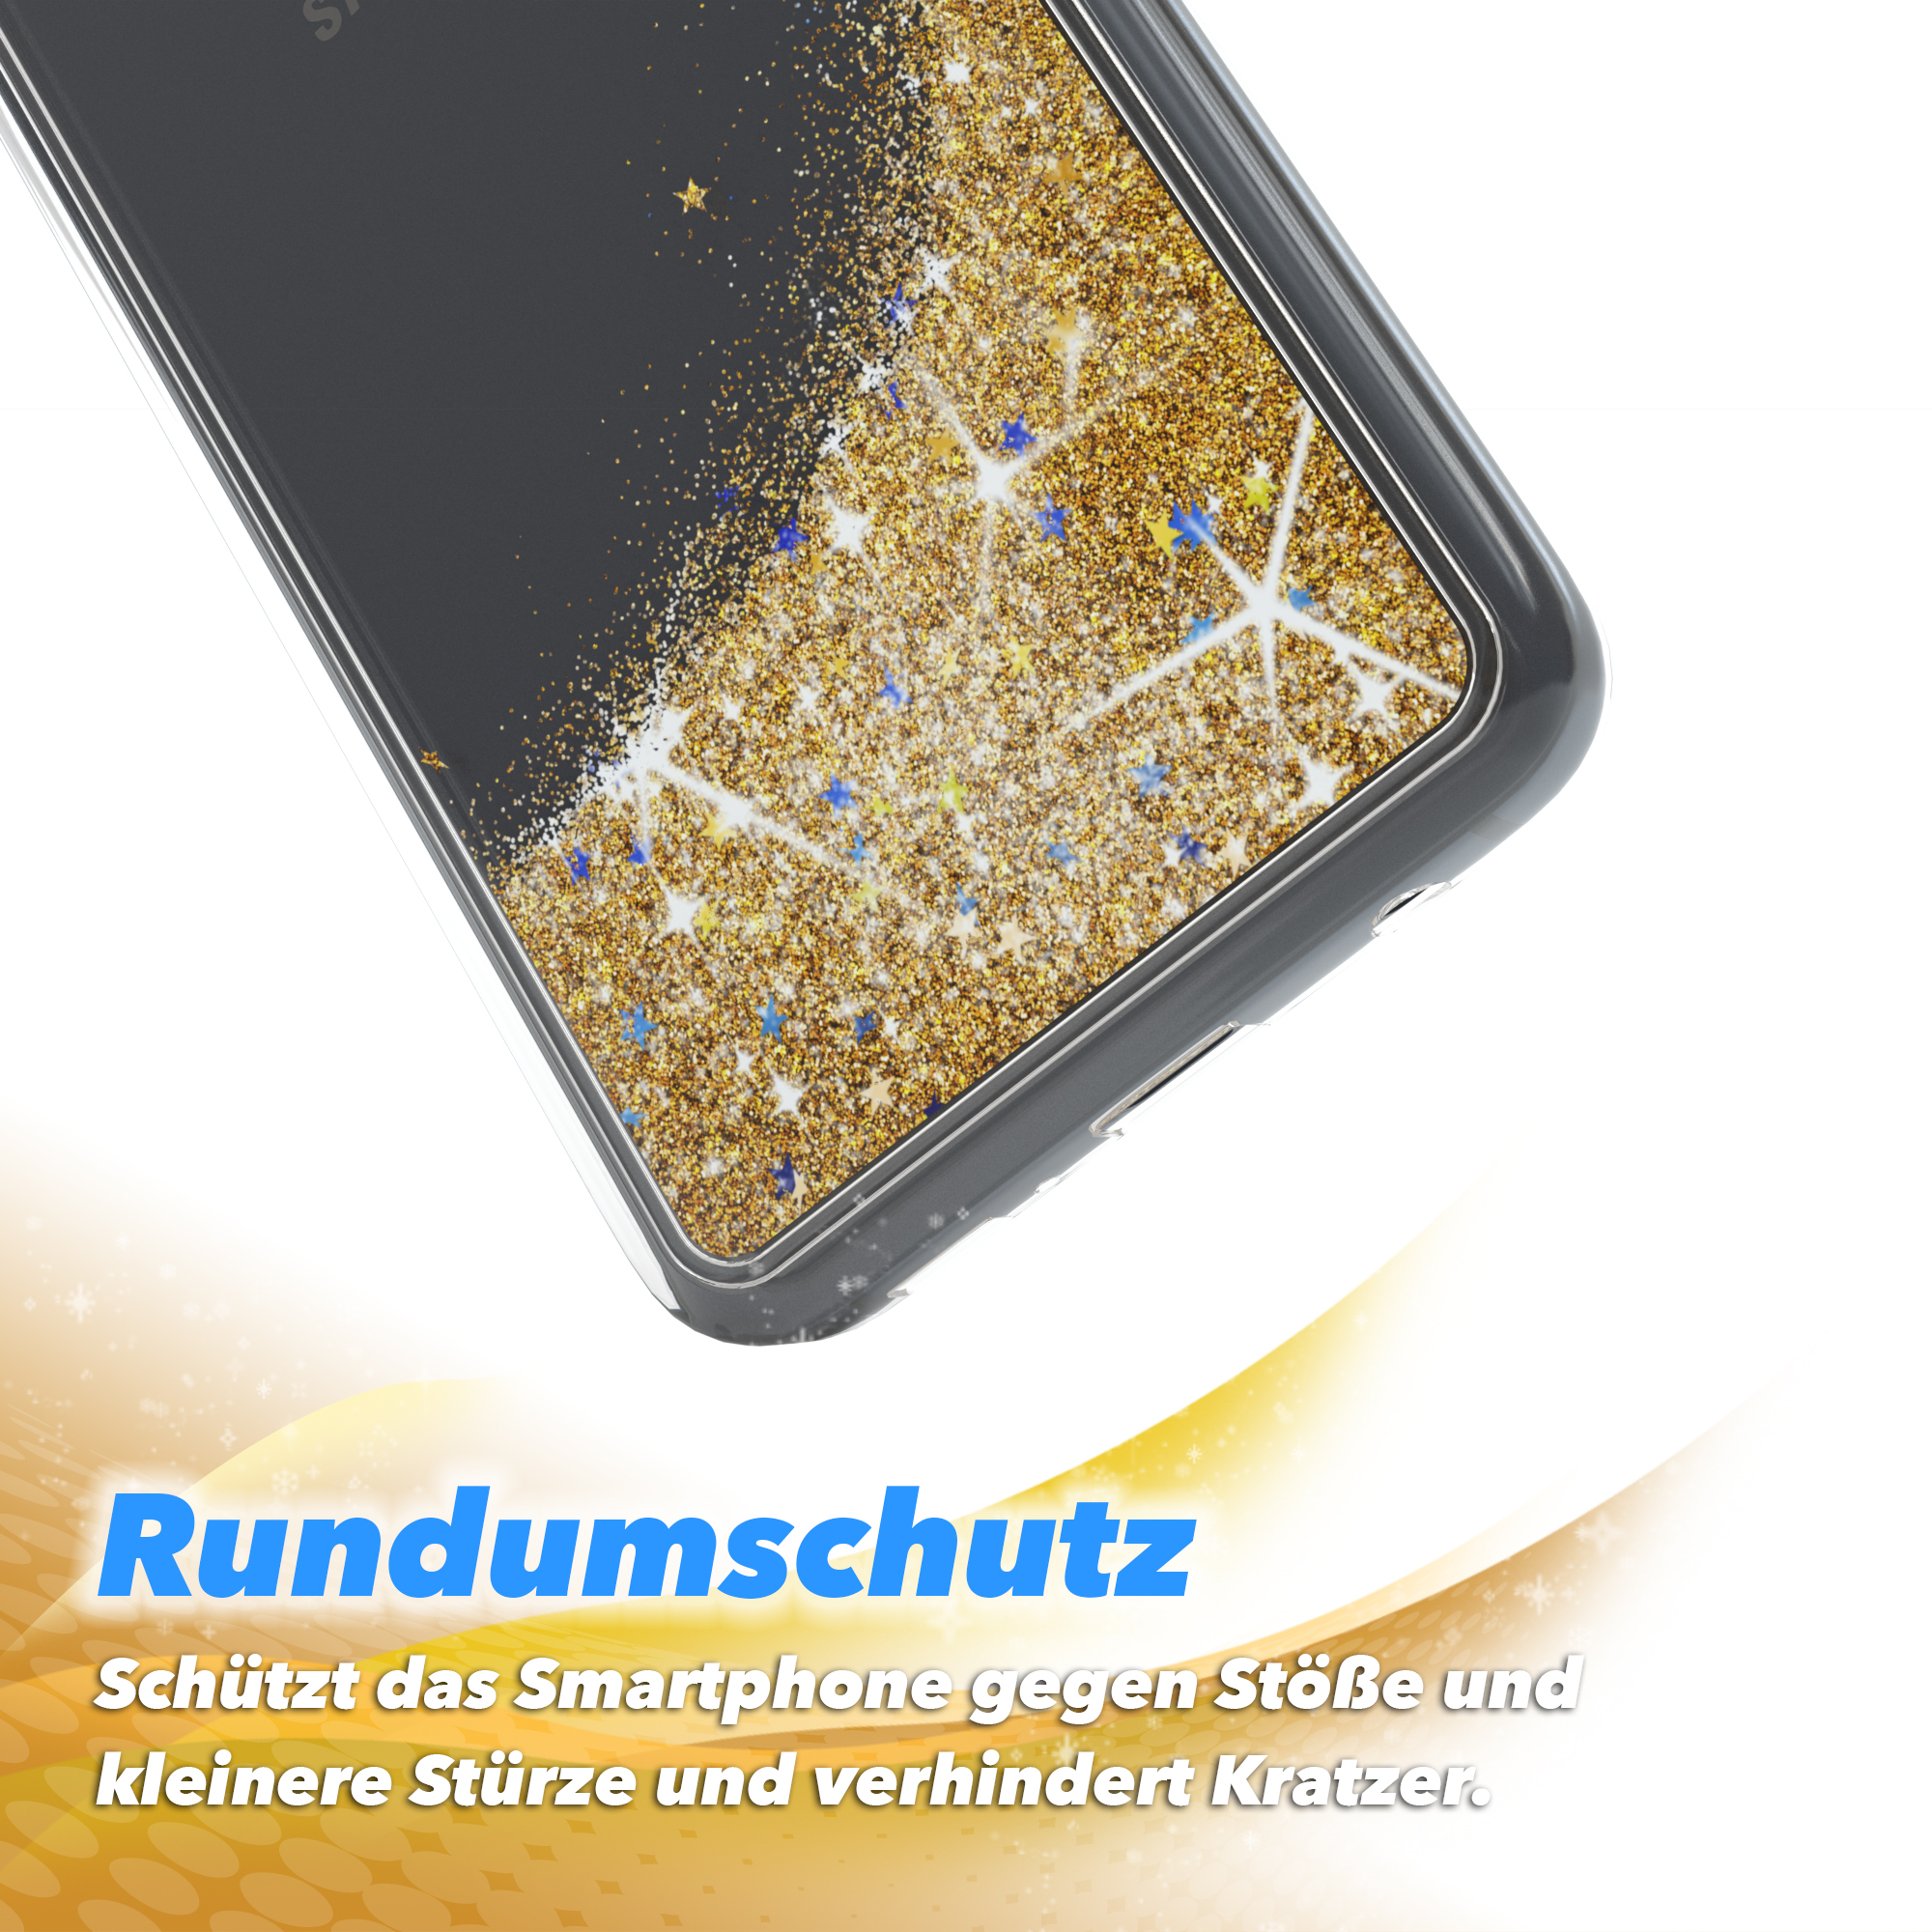 EAZY CASE Glitzerhülle Gold Backcover, Galaxy Samsung, S10e, Flüssig